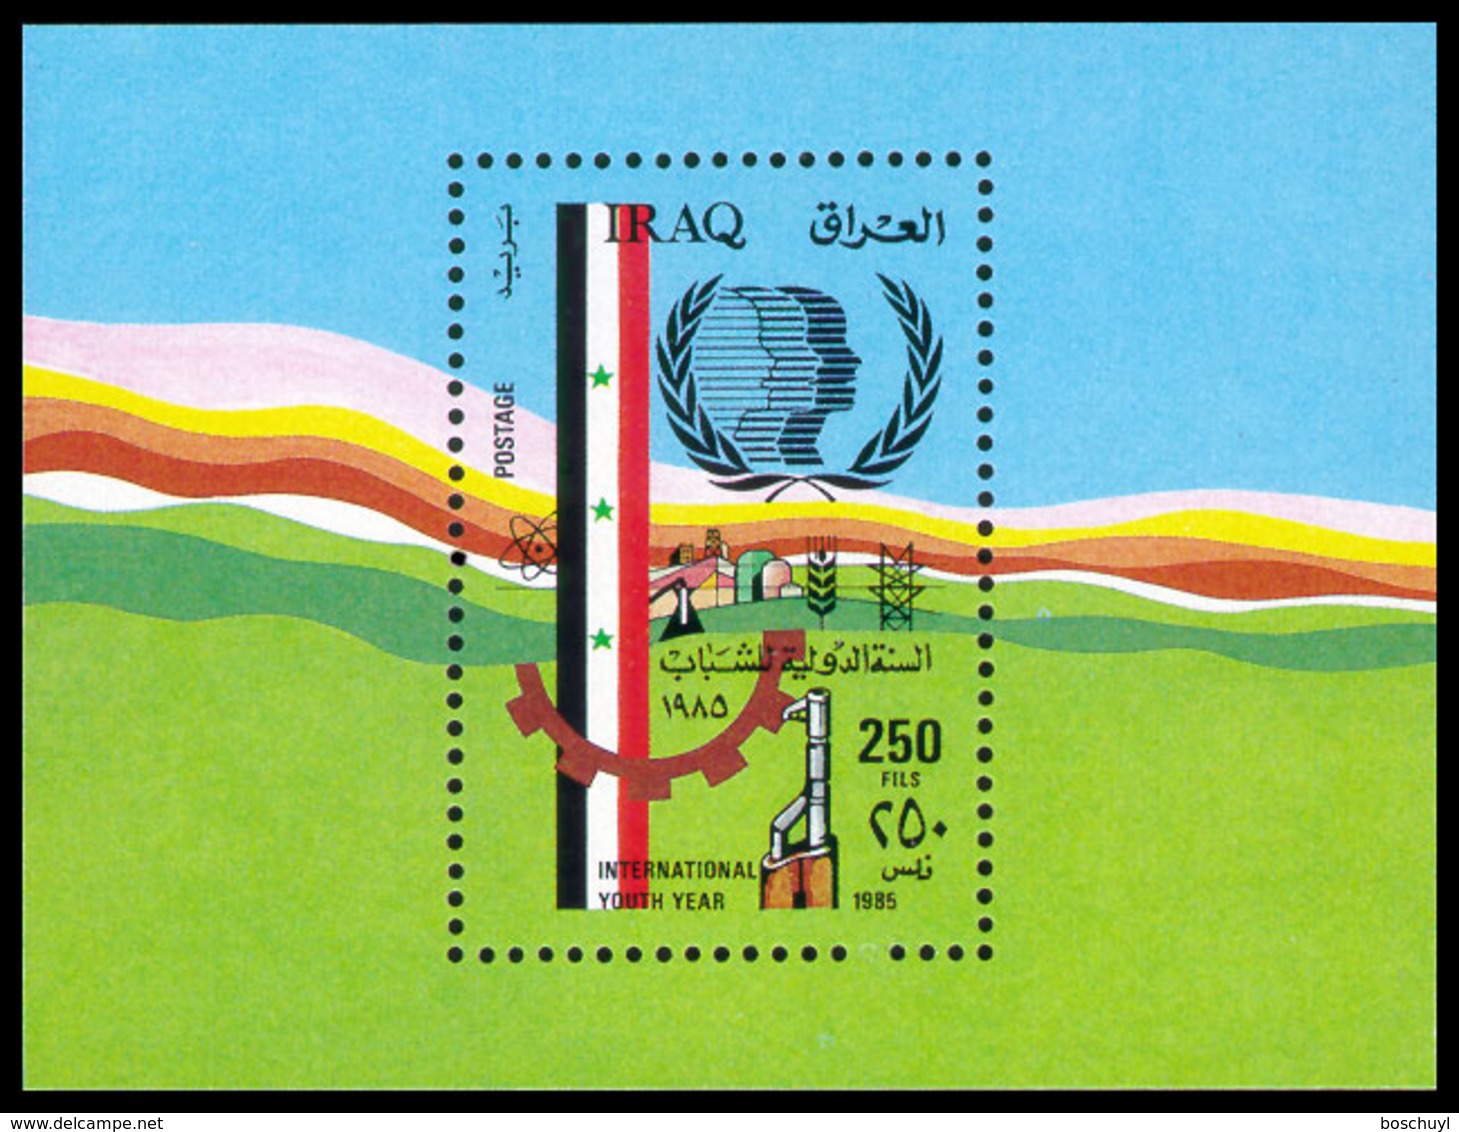 Iraq, 1985, International Youth Year, United Nations, Nations Unies, MNH, Michel Block 45A - Iraq